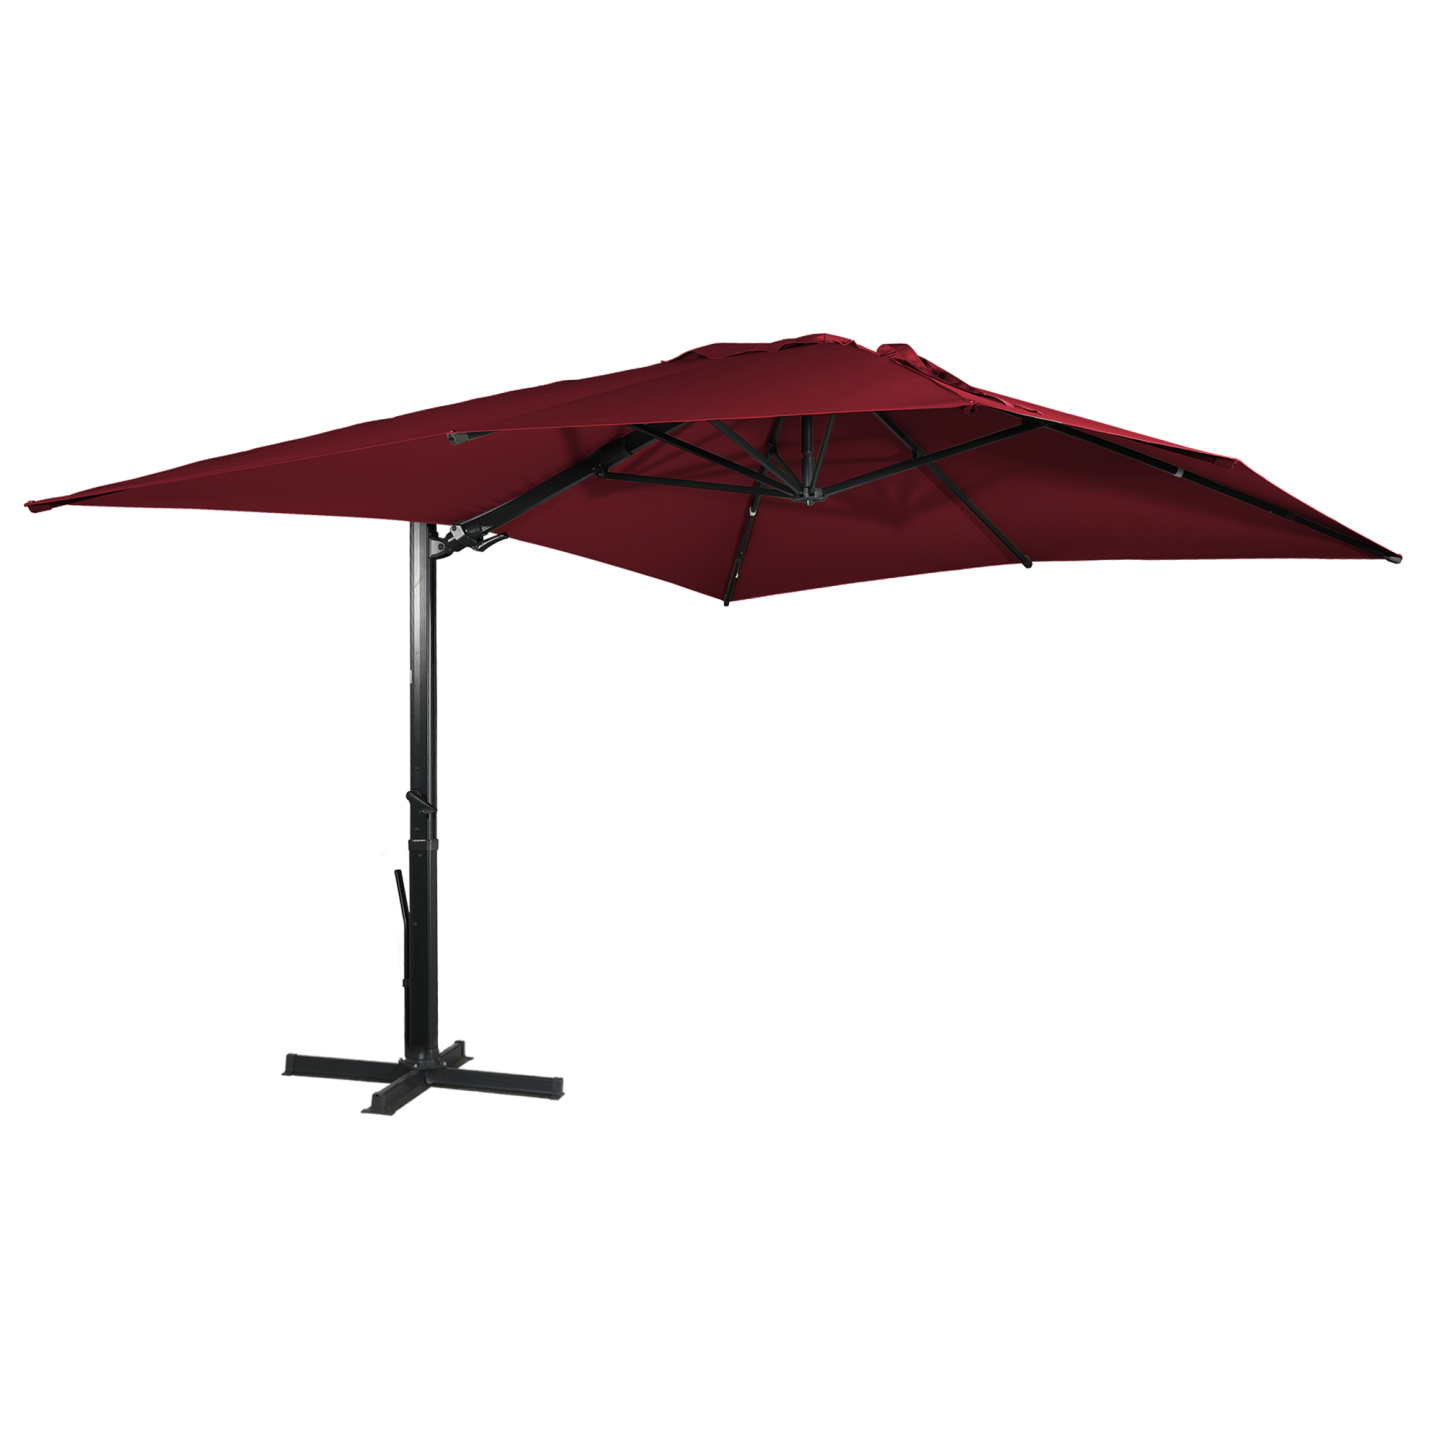 Mondawe 13ft Square Aluminum Tilt Umbrella for Outdoor Patio Umbrella